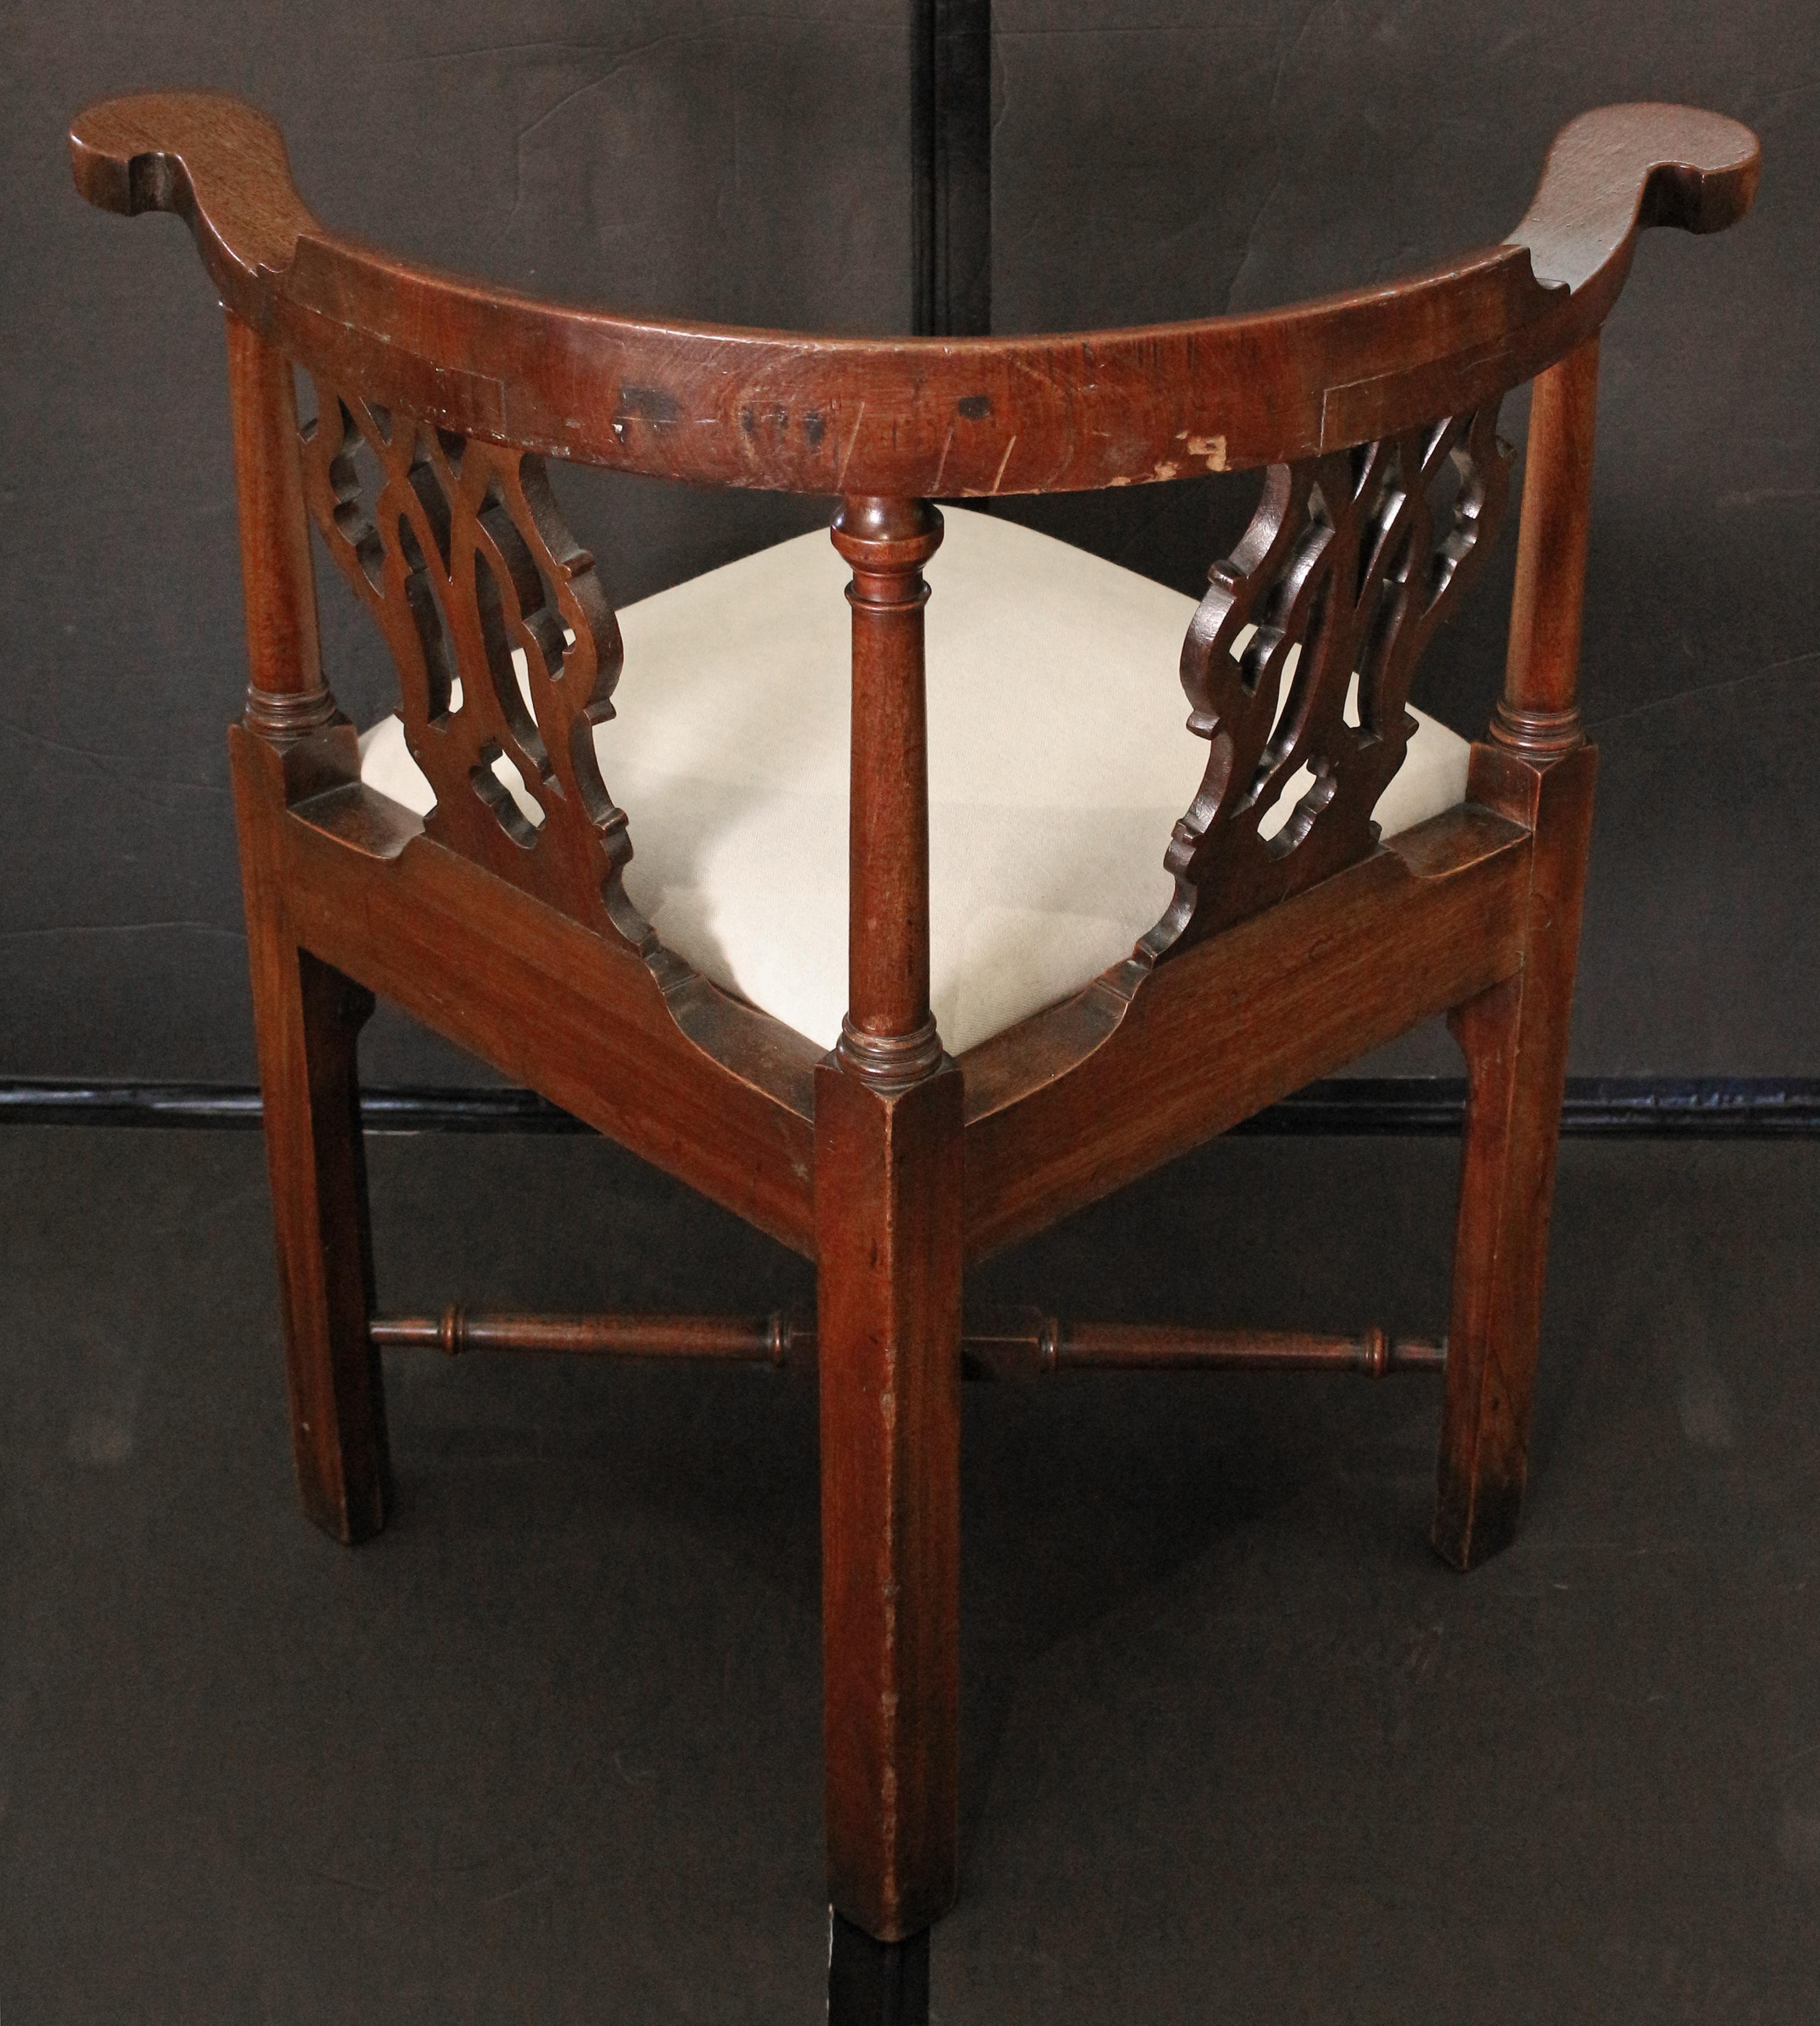 Upholstery Circa 1760-80 George III Period English Corner Chair